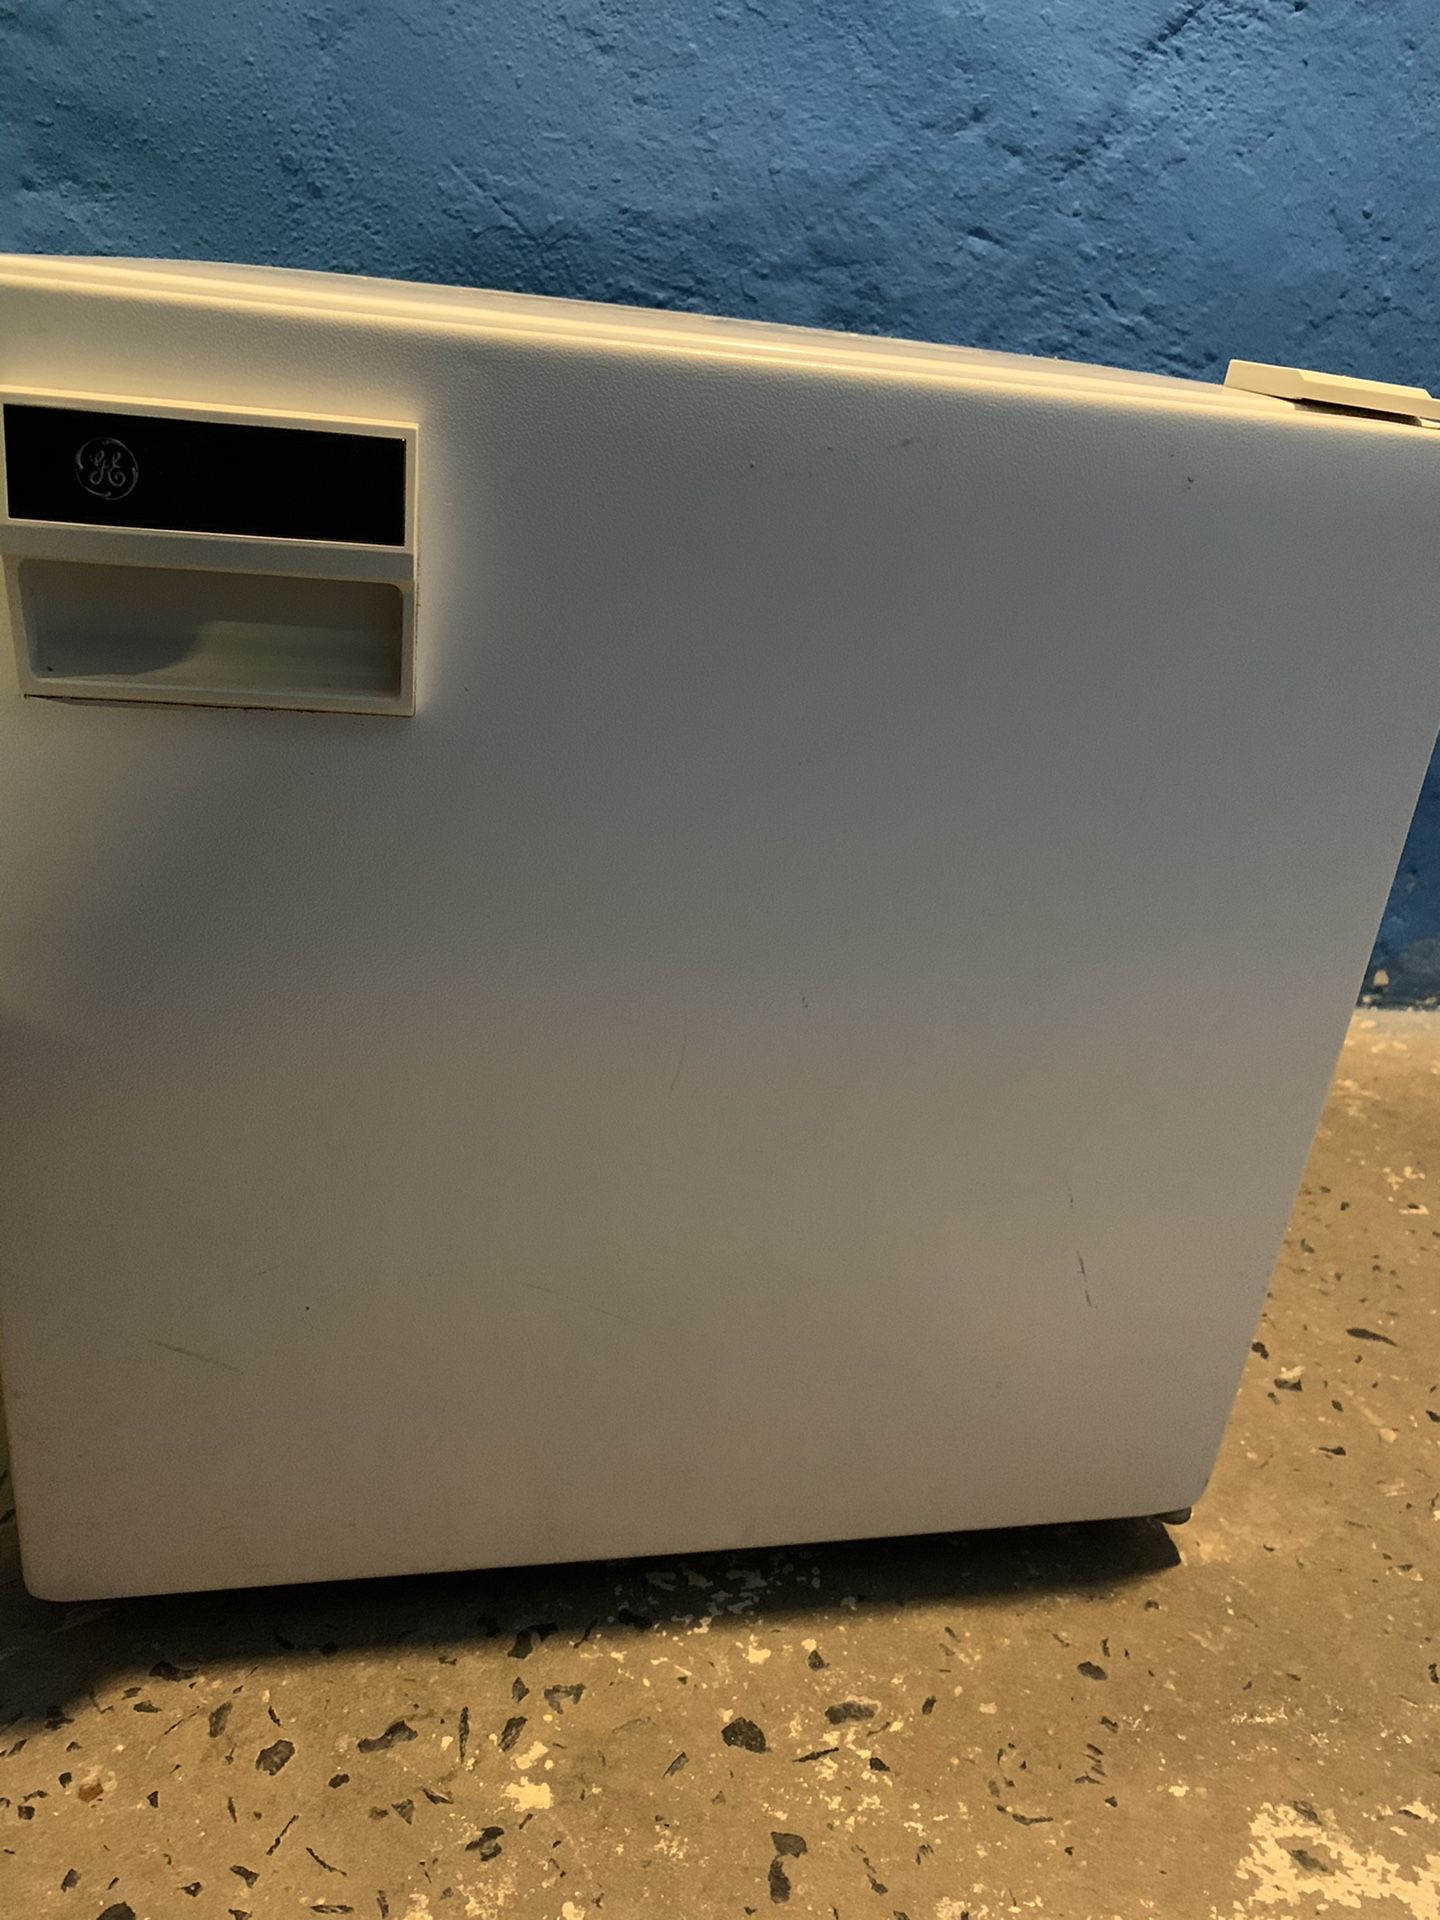 GE mini refrigerator